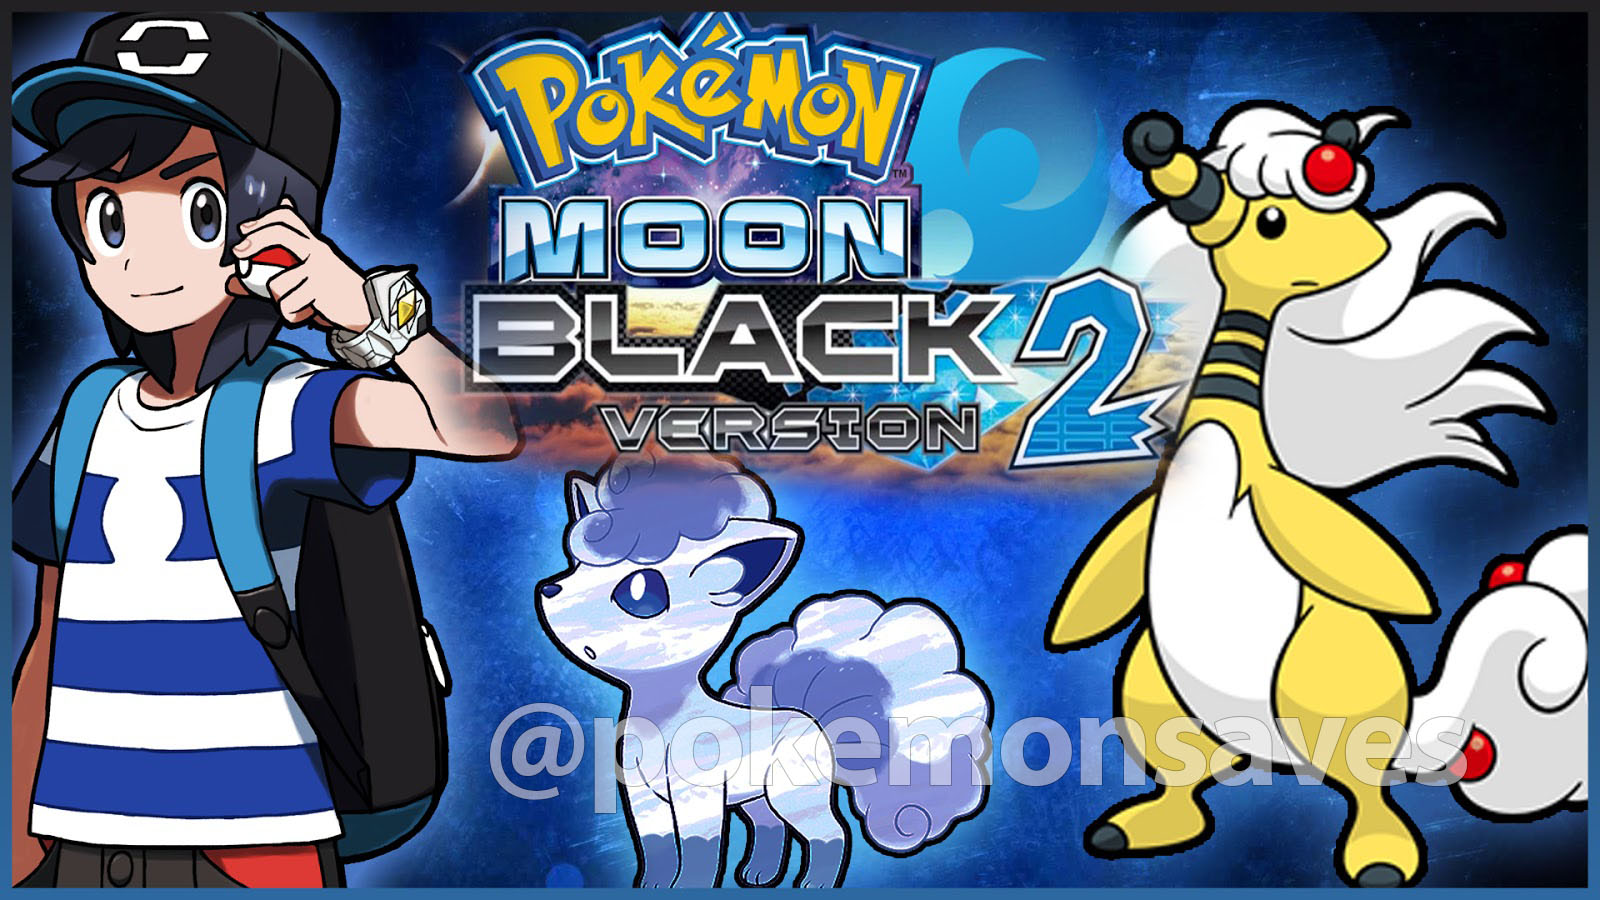 Pokemon Moon Black 2 [NDS HACK] - ATUALIZAÇÃO 2022 